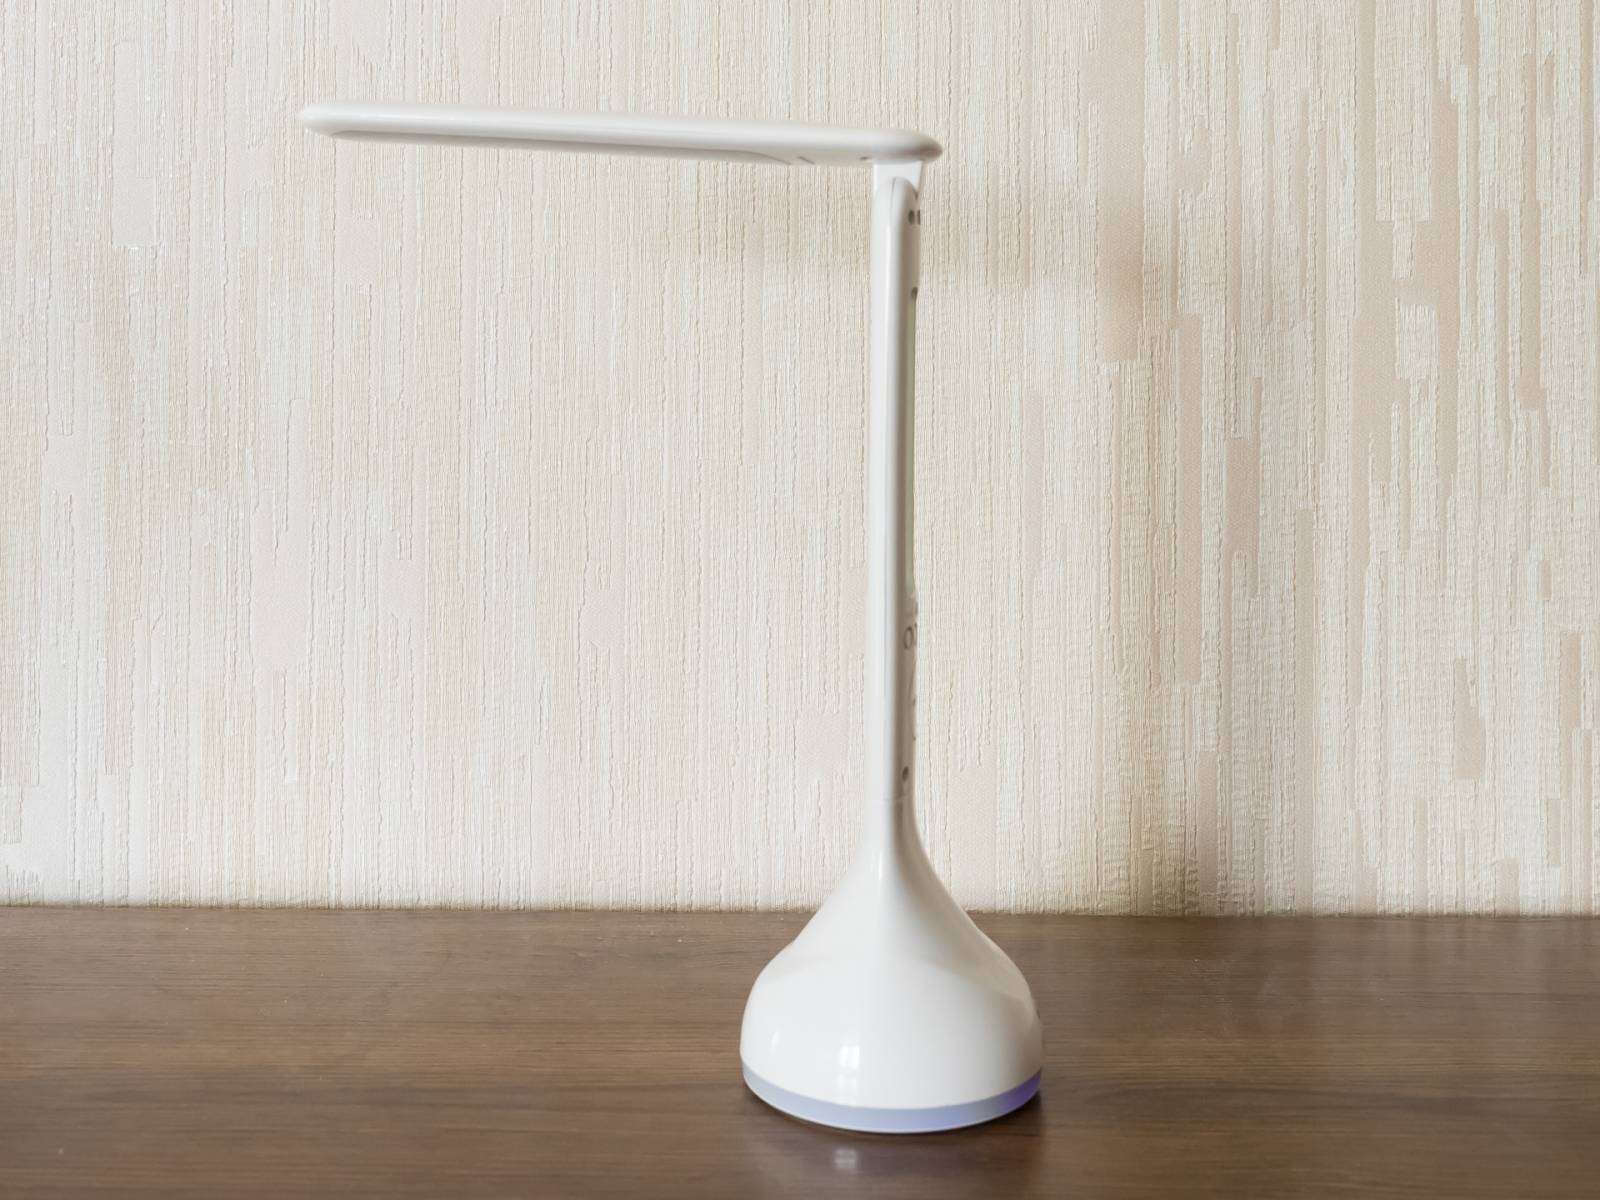 GearBest: Настольная LED лампа, ночник, часы, календарь, термометр, будильник